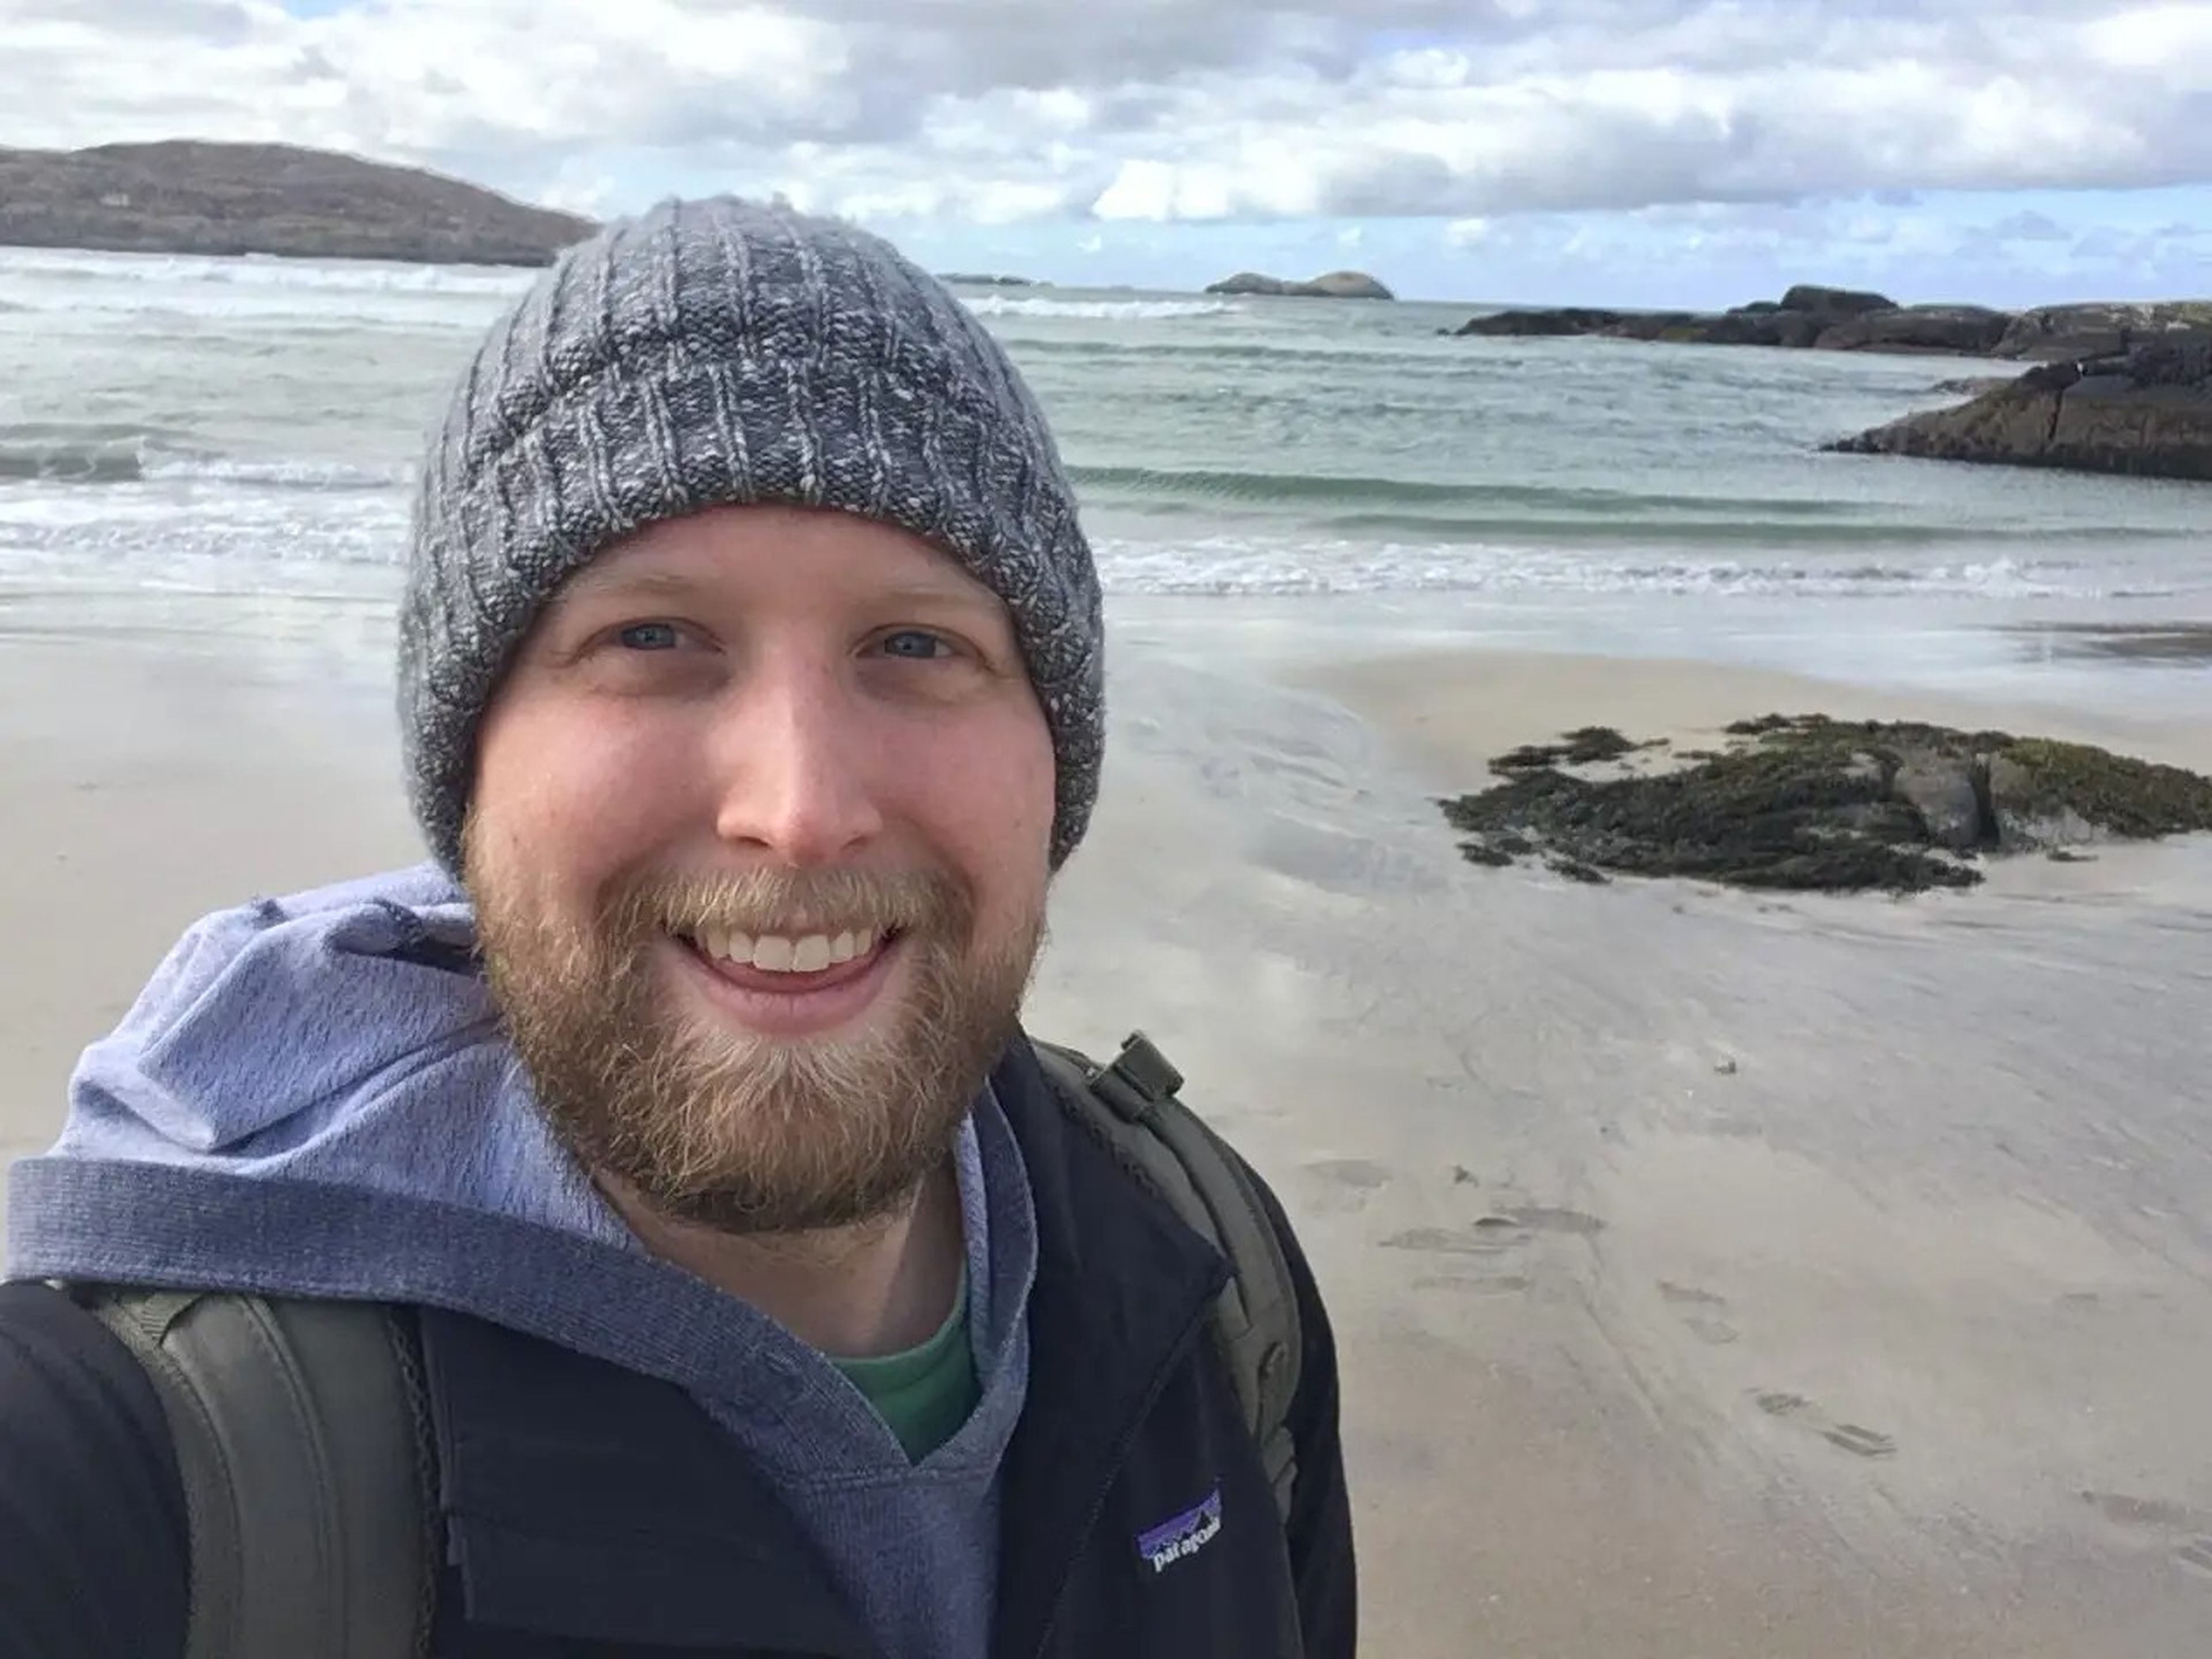 tim posing for a selfie on an irish beach